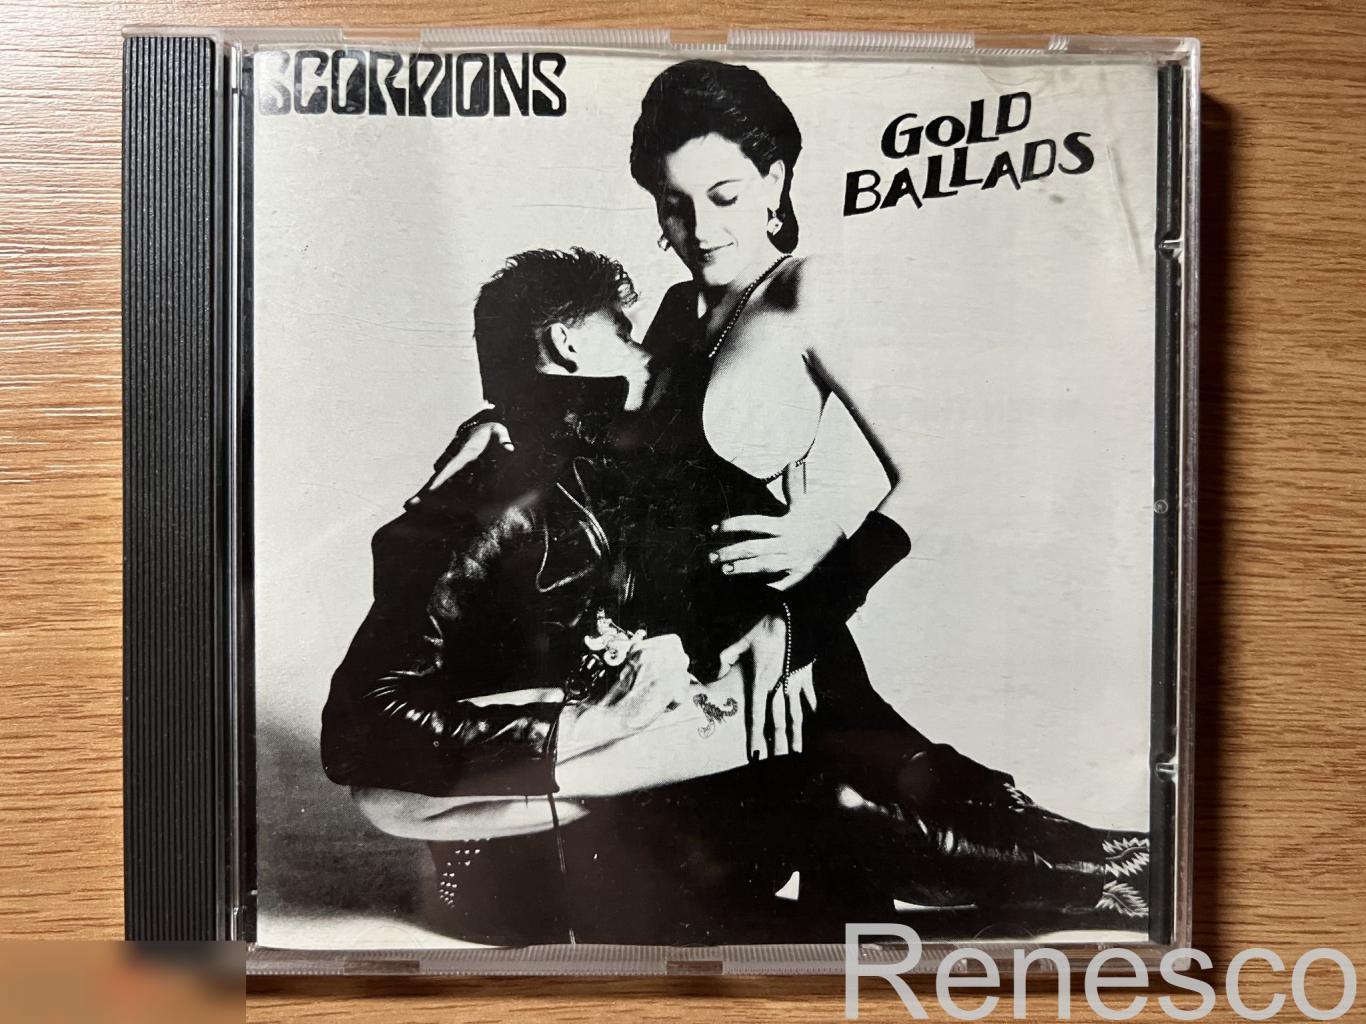 Scorpions – Gold Ballads (Holland) (Repress)